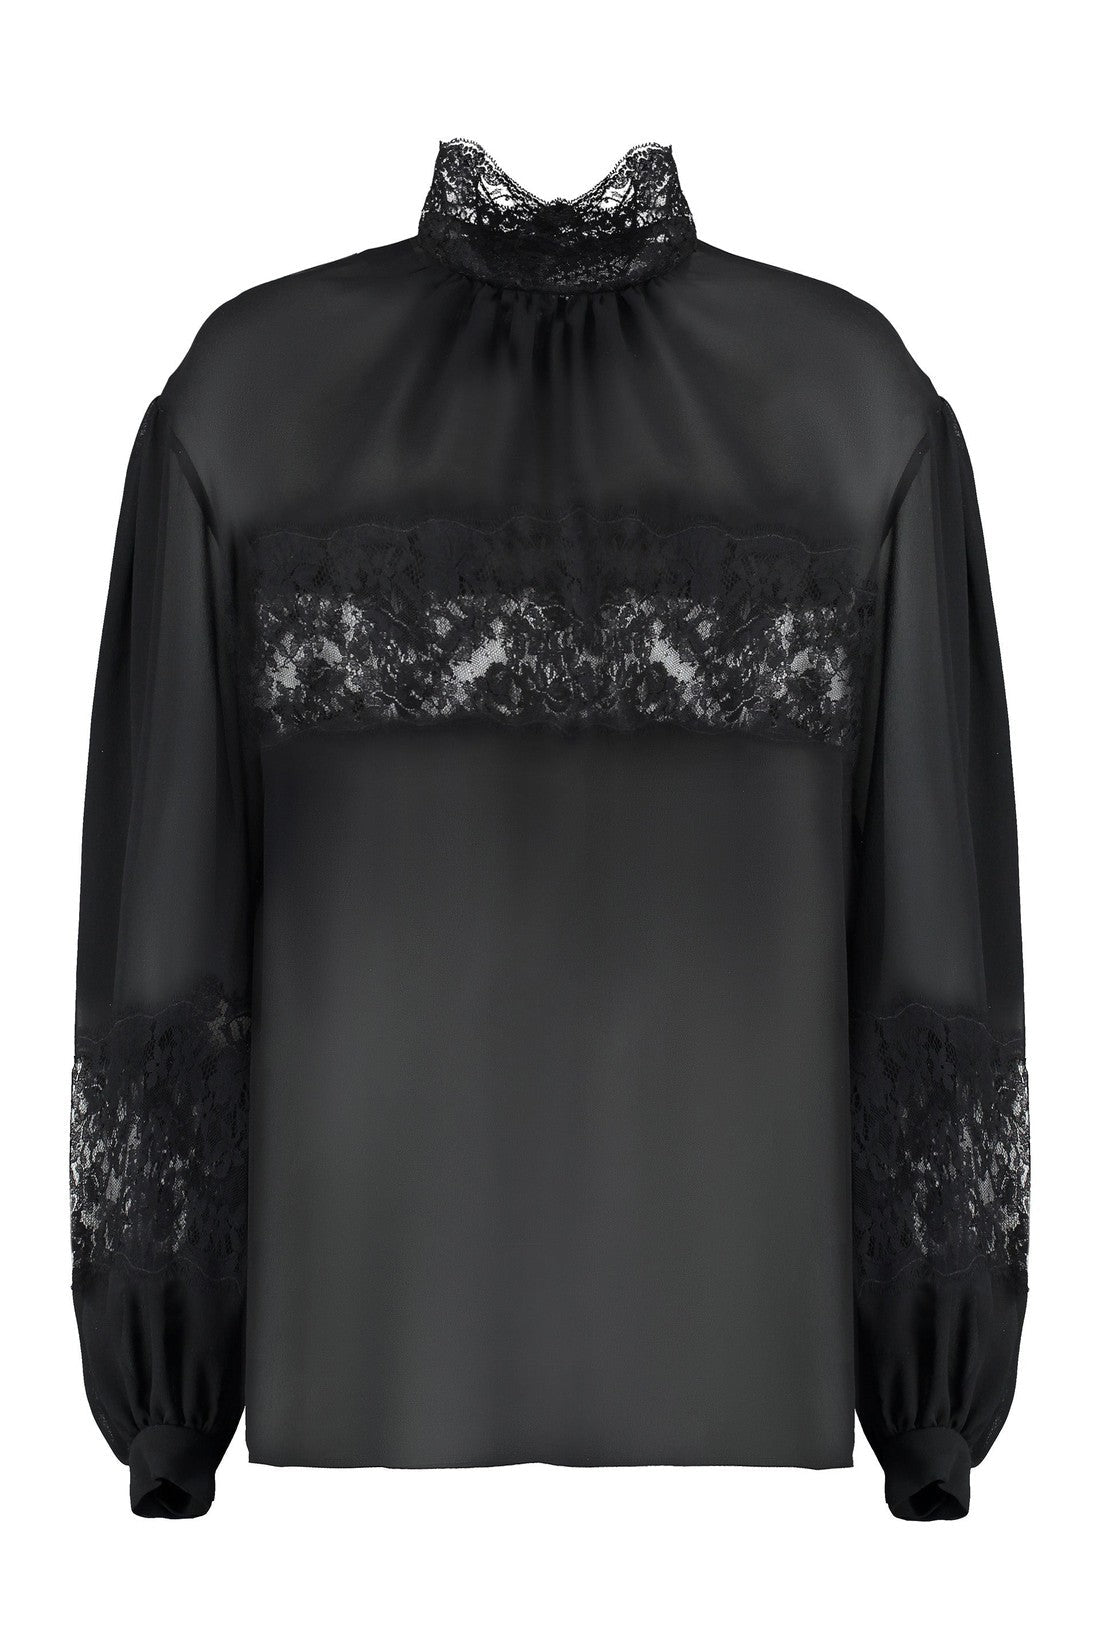 Dolce & Gabbana-OUTLET-SALE-Lace and georgette blouse-ARCHIVIST